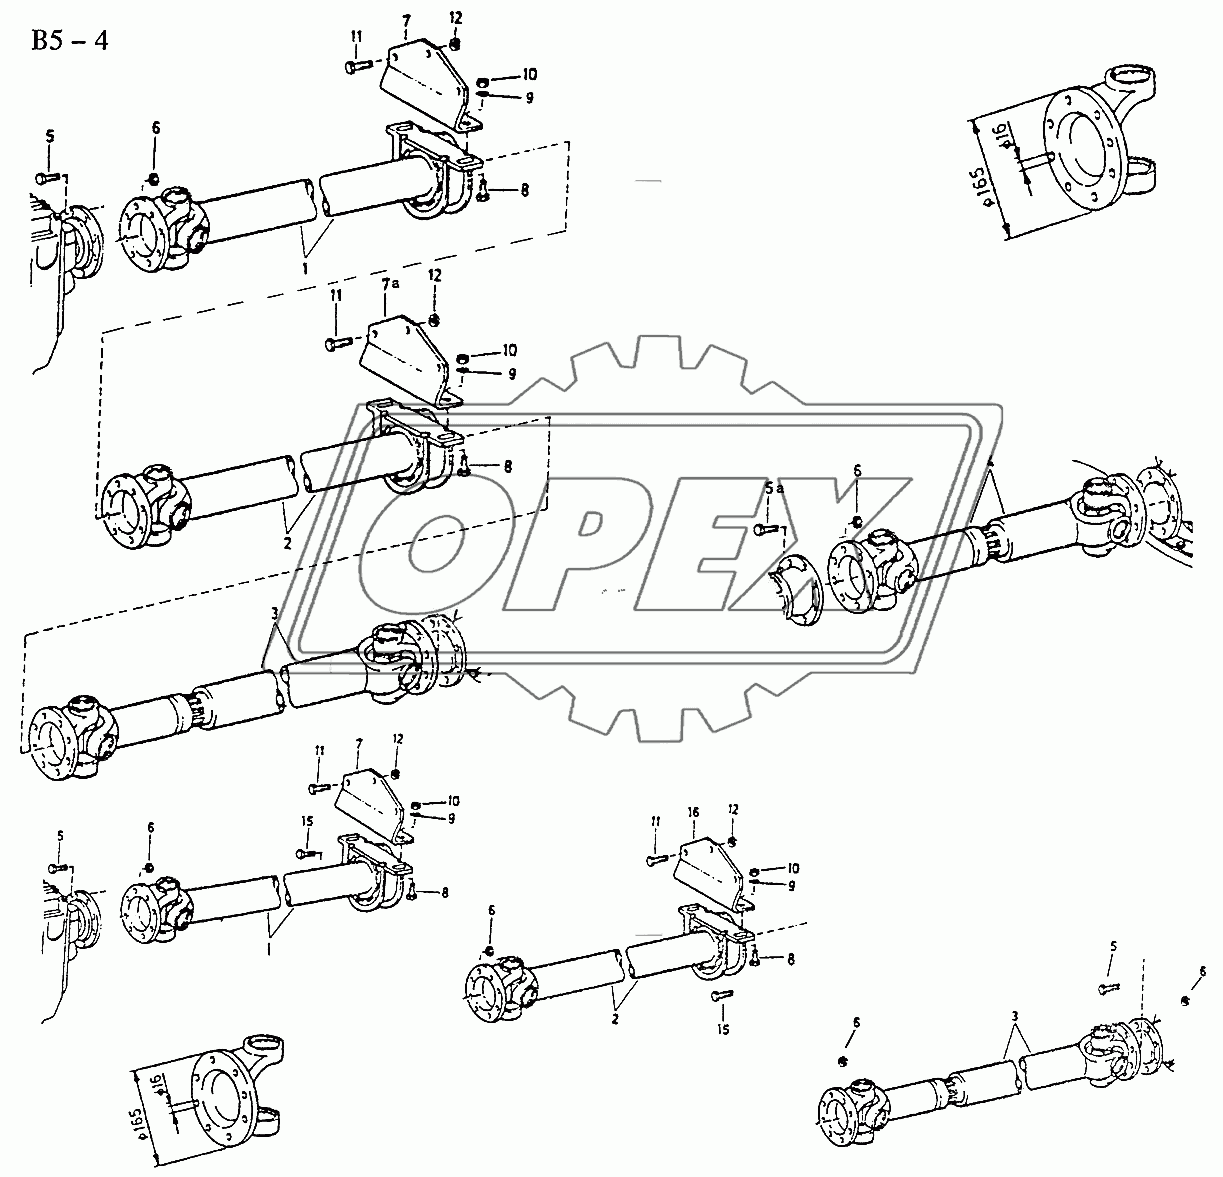 6x4, 8x4 PROPELLER SHAFTS FOR LONG WHEEL BASE 336/O38/8x4 (Fuller gearbox) (B5-4-3)